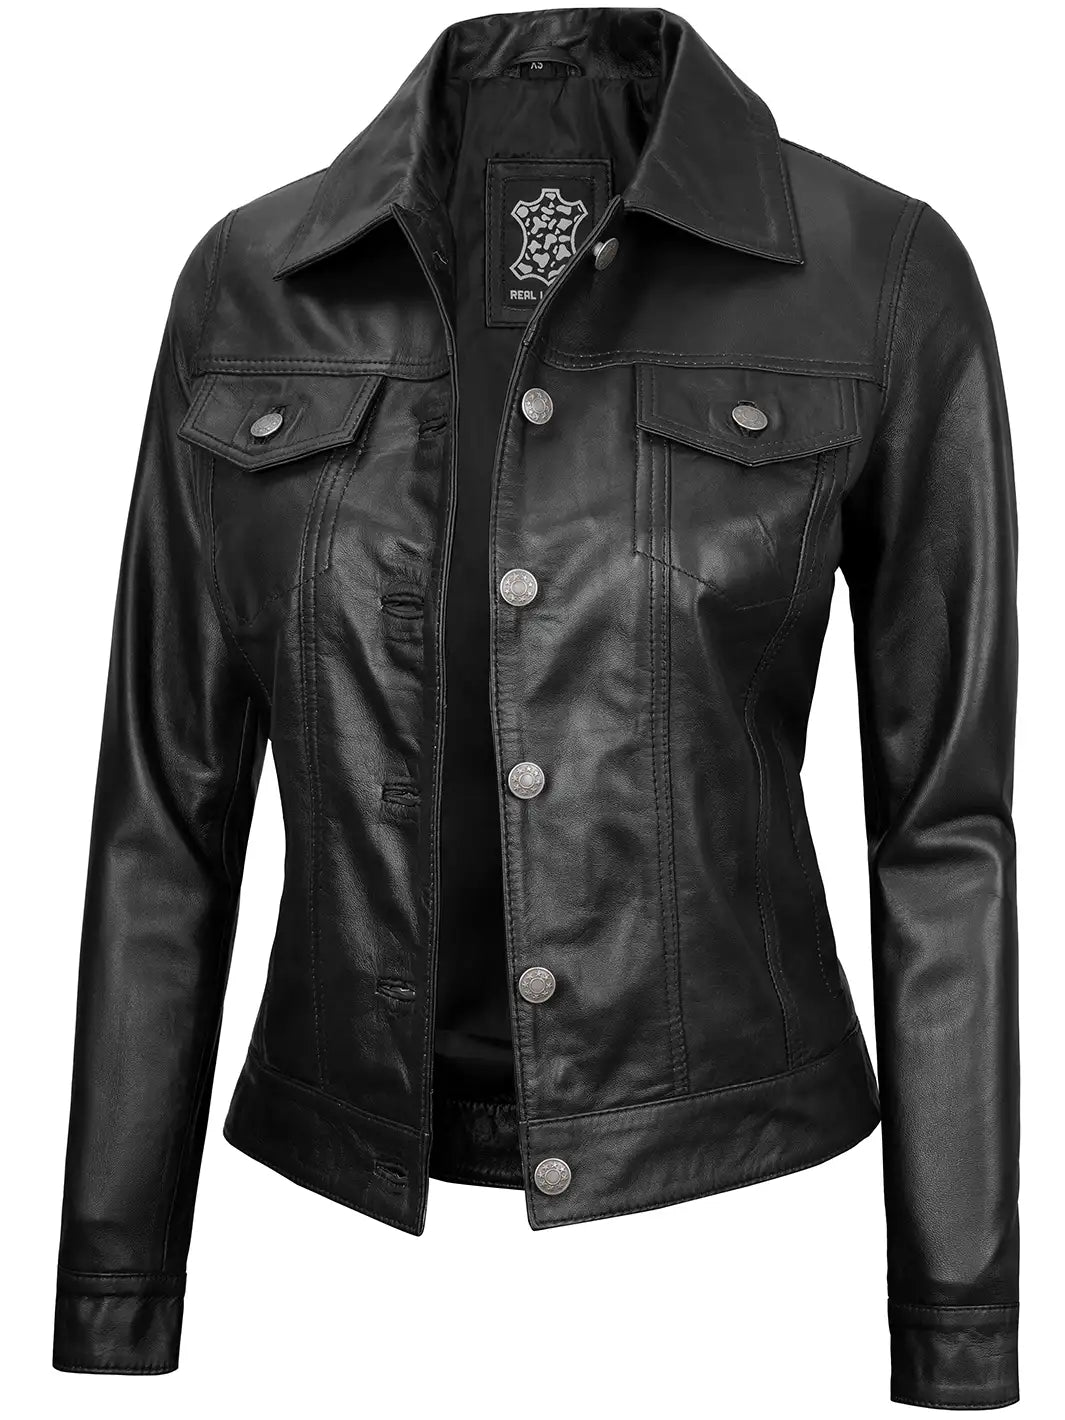 Black trucker leather jacket for women